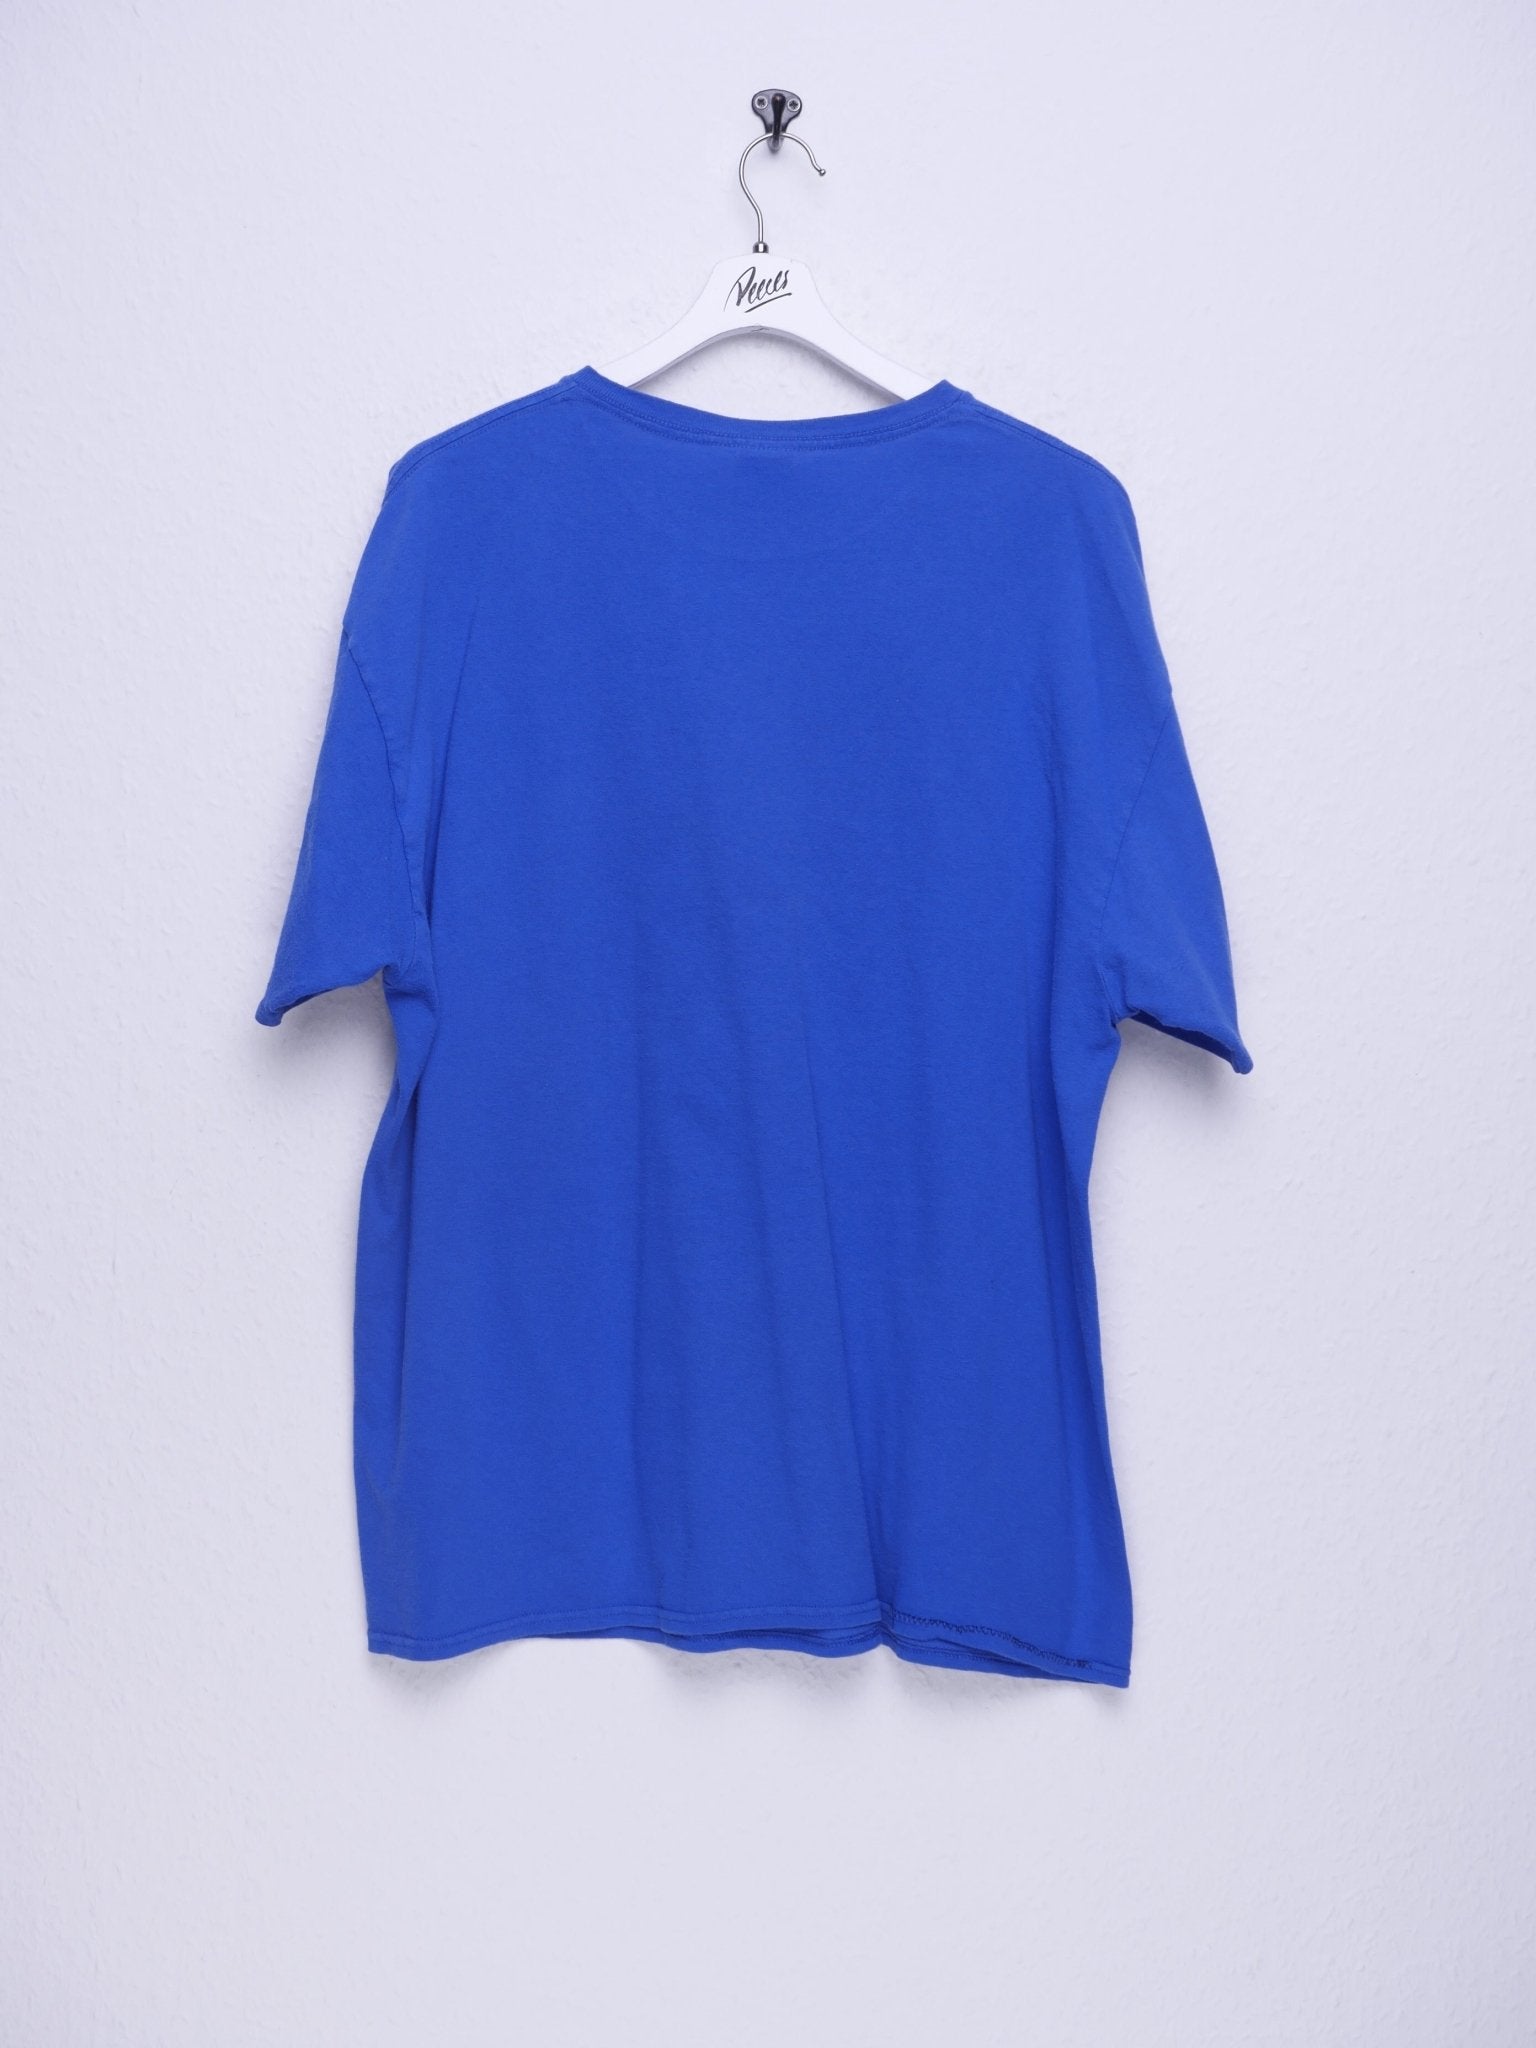 Delta printed Dilmour Academy blue Shirt - Peeces